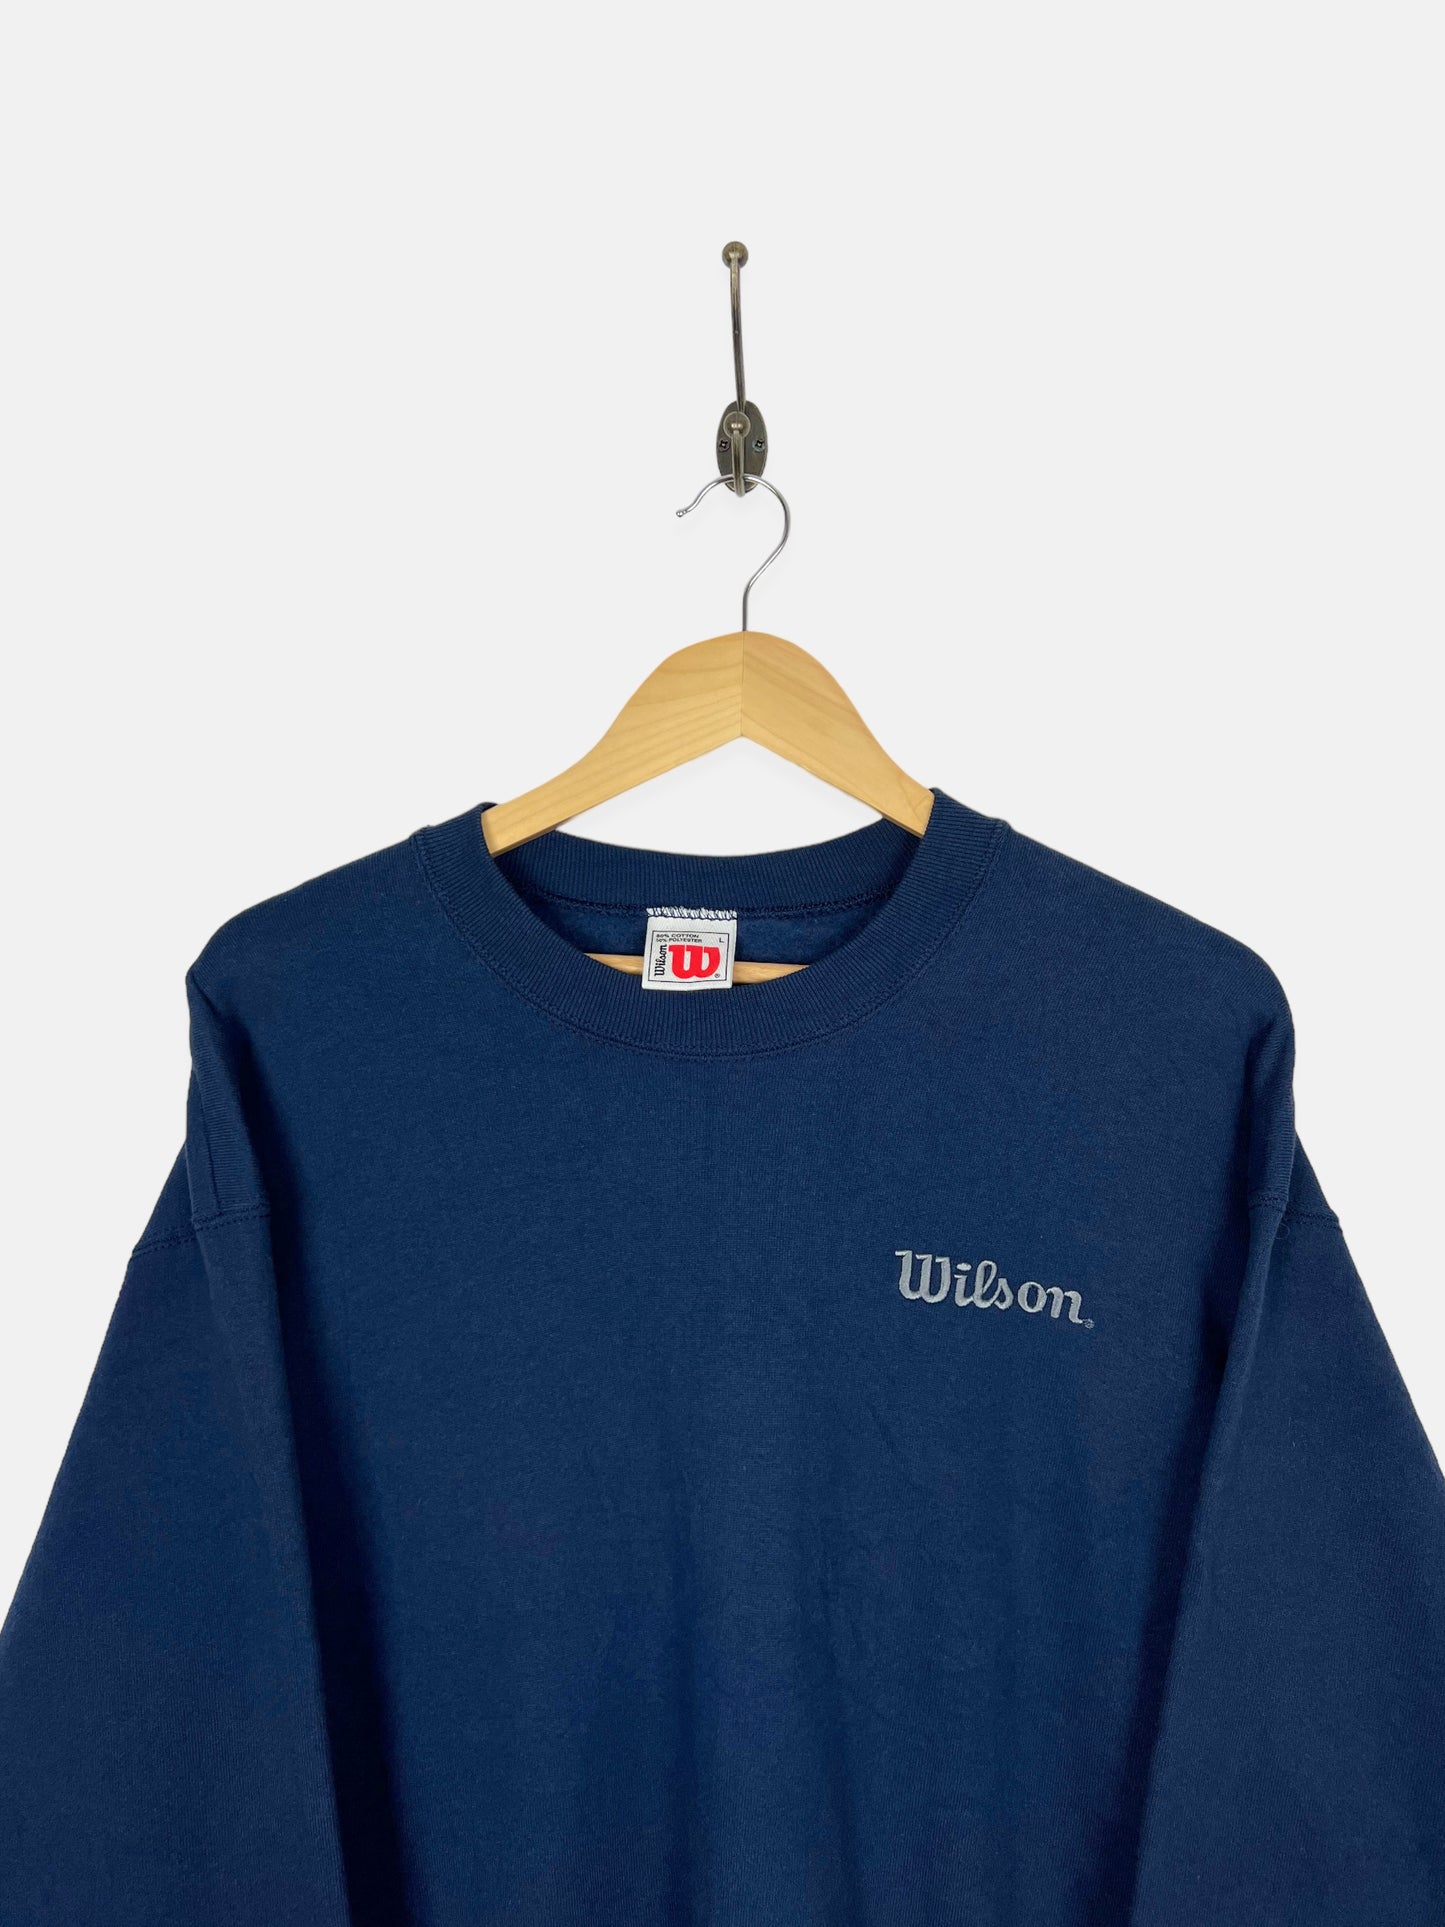 90's Wilson USA Made Embroidered Vintage Sweatshirt Size L